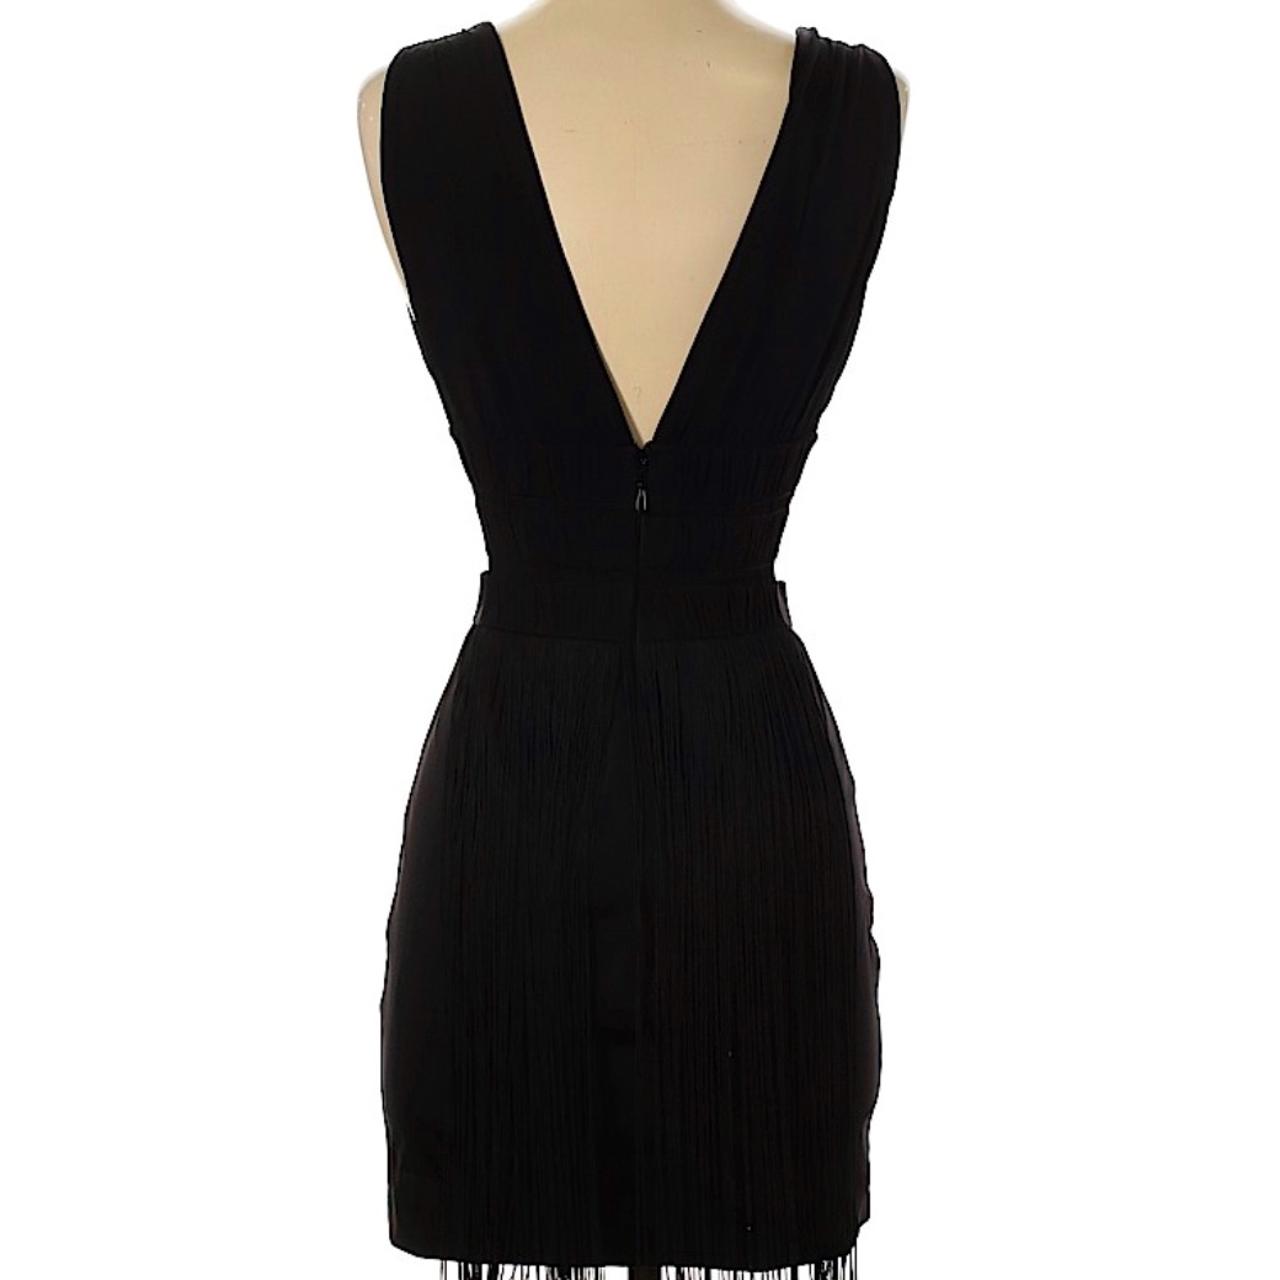 Bebe Women's Black Dress | Depop